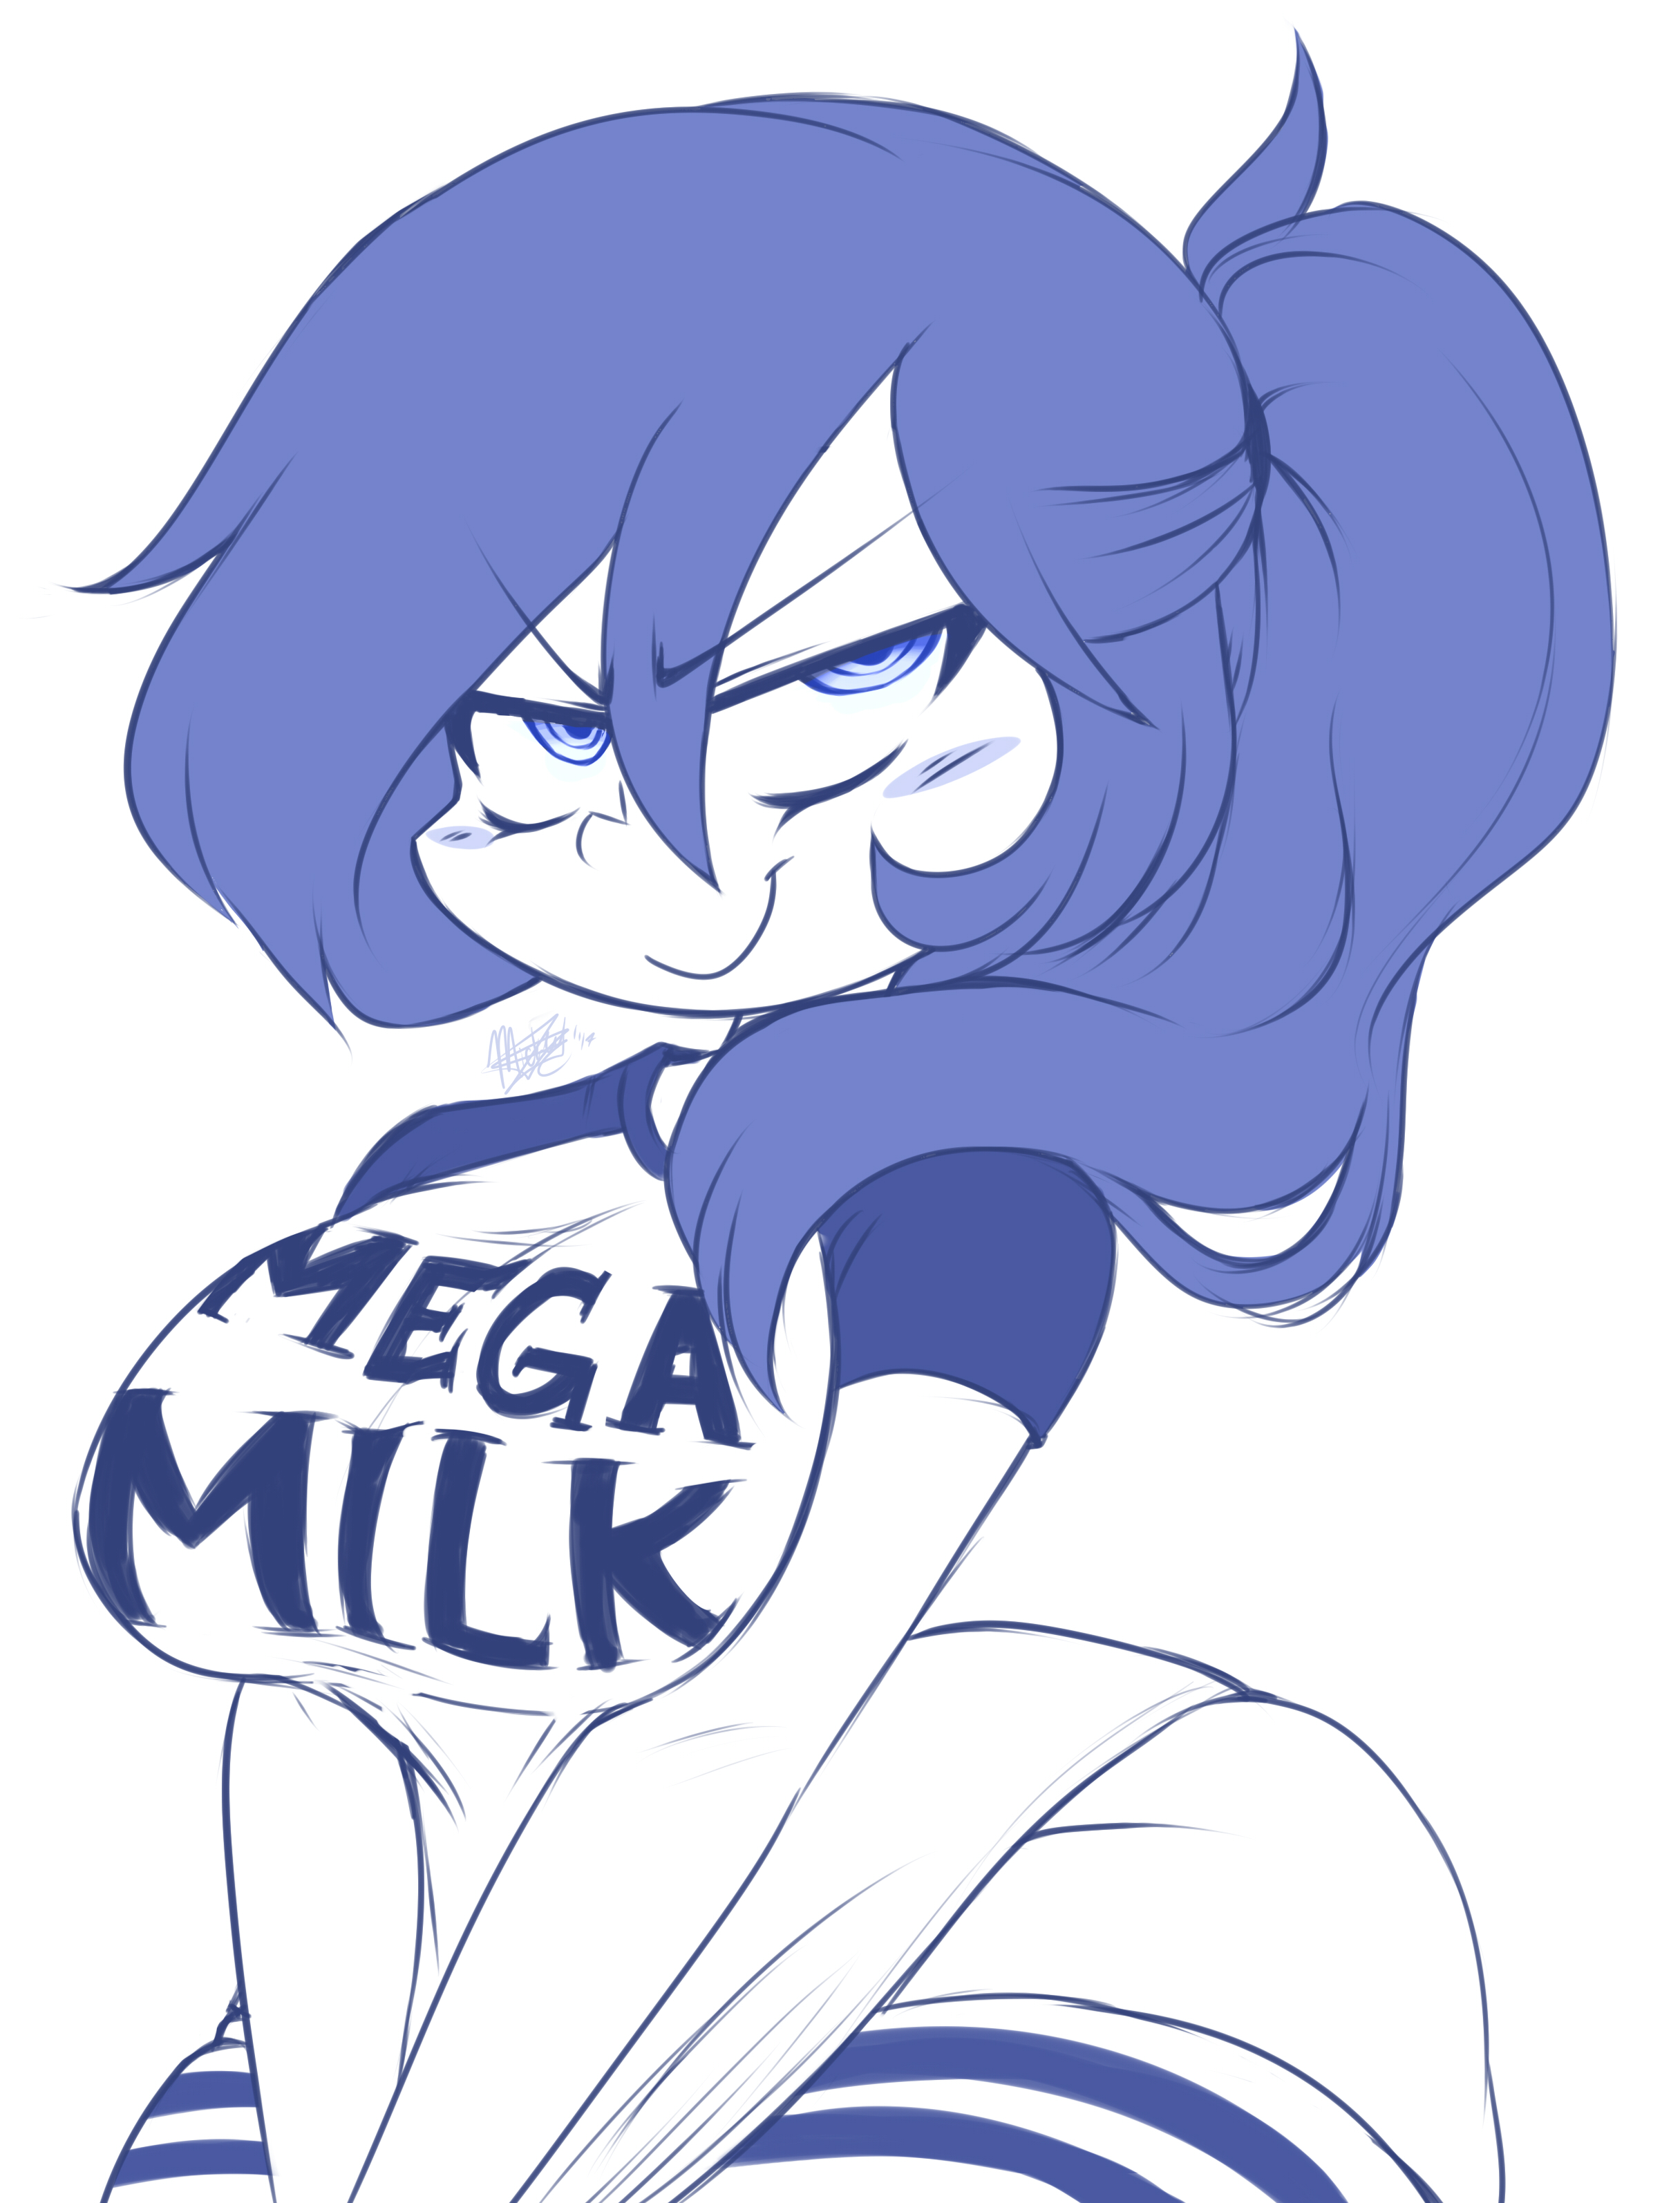 Mega Milk